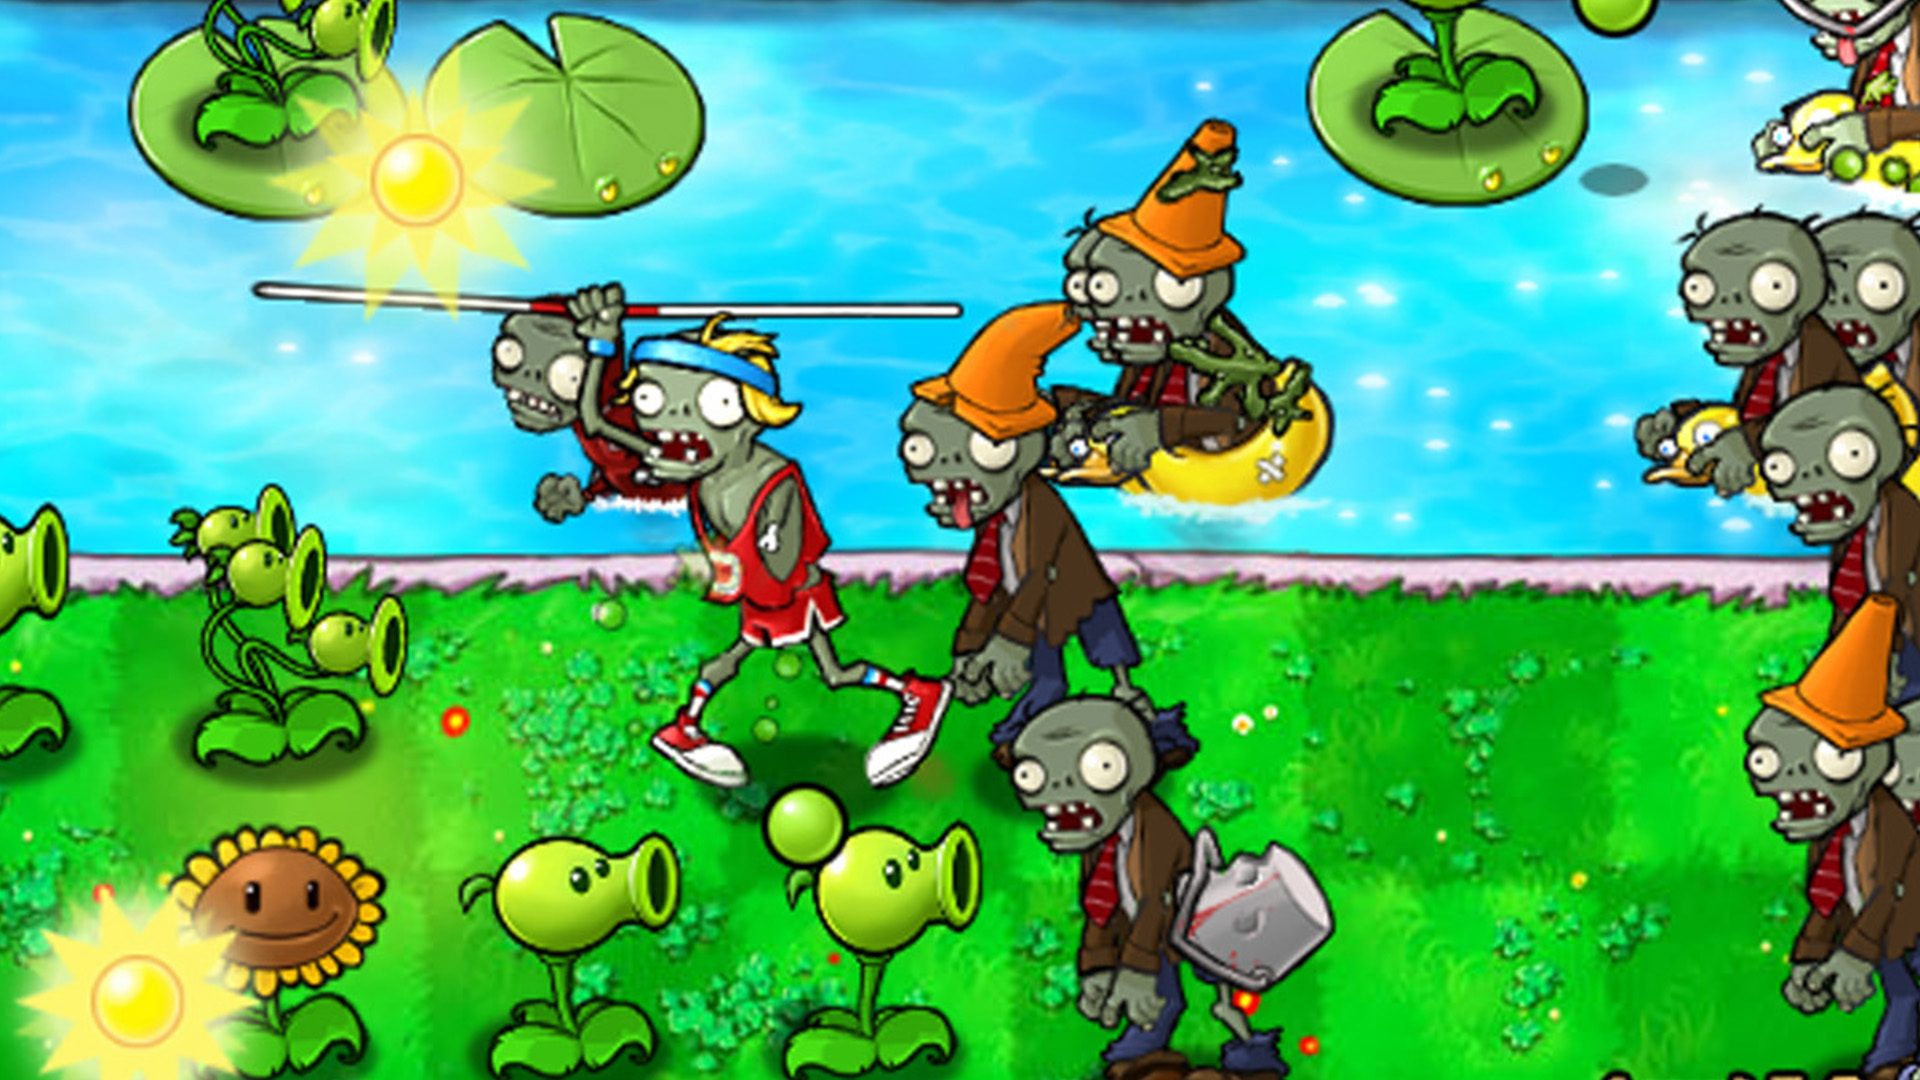 Plants vs Zombies 2: It's About Time Fansite